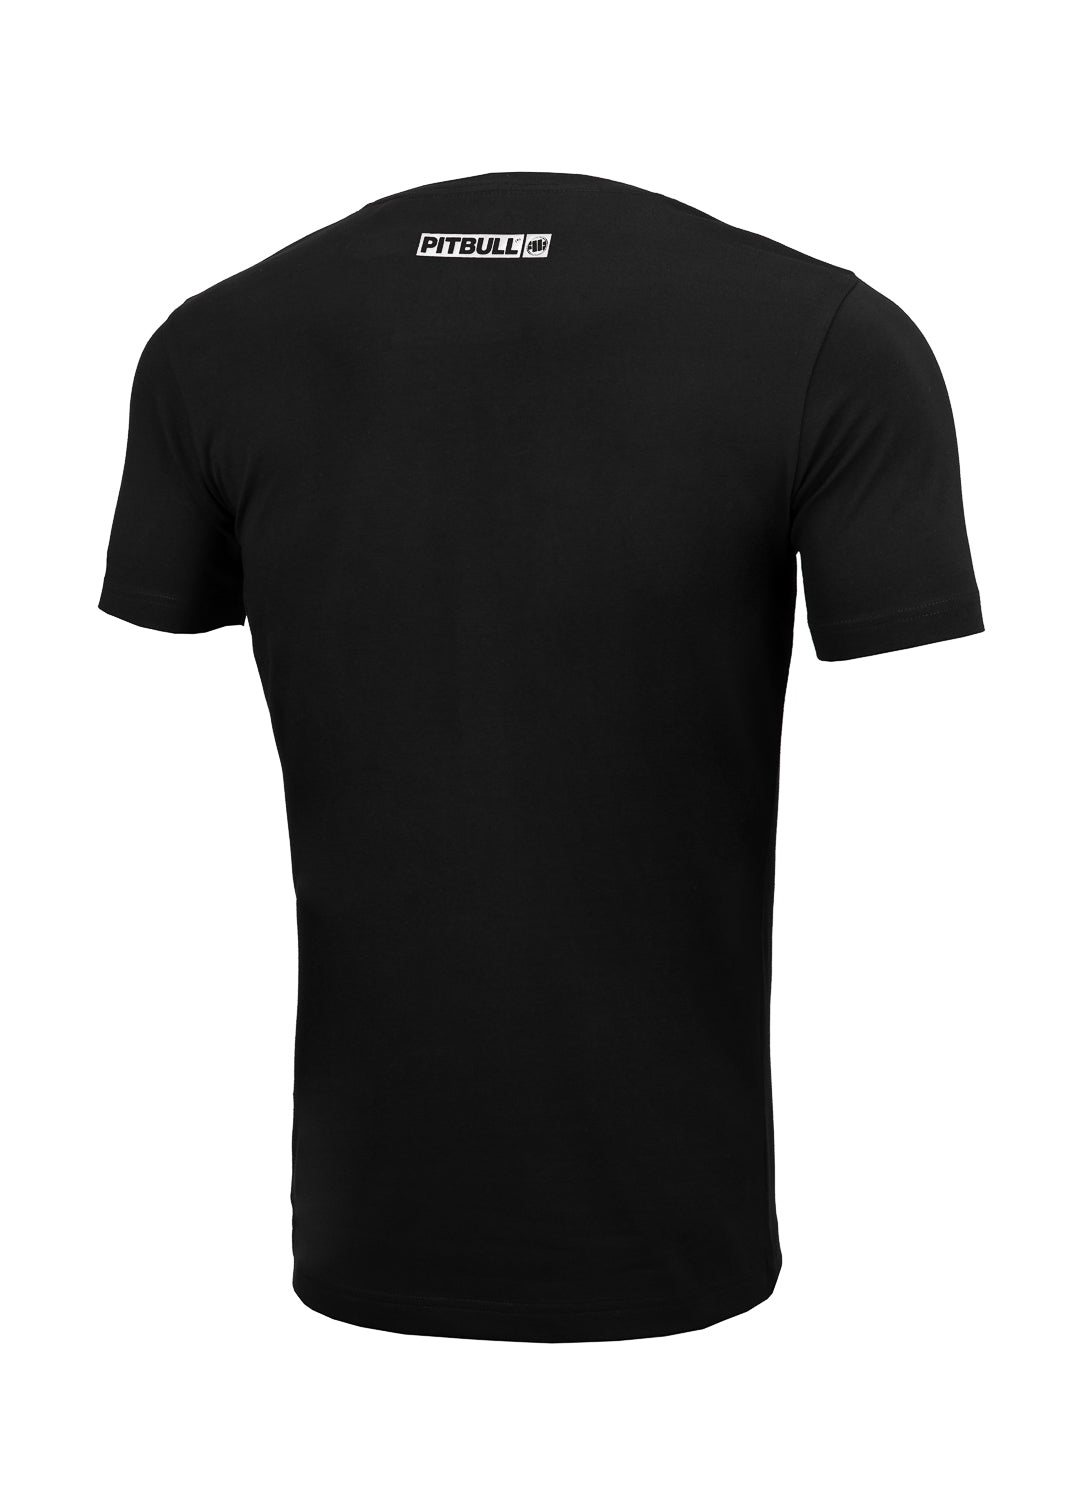 HILLTOP Slim Fit T-shirt Black.